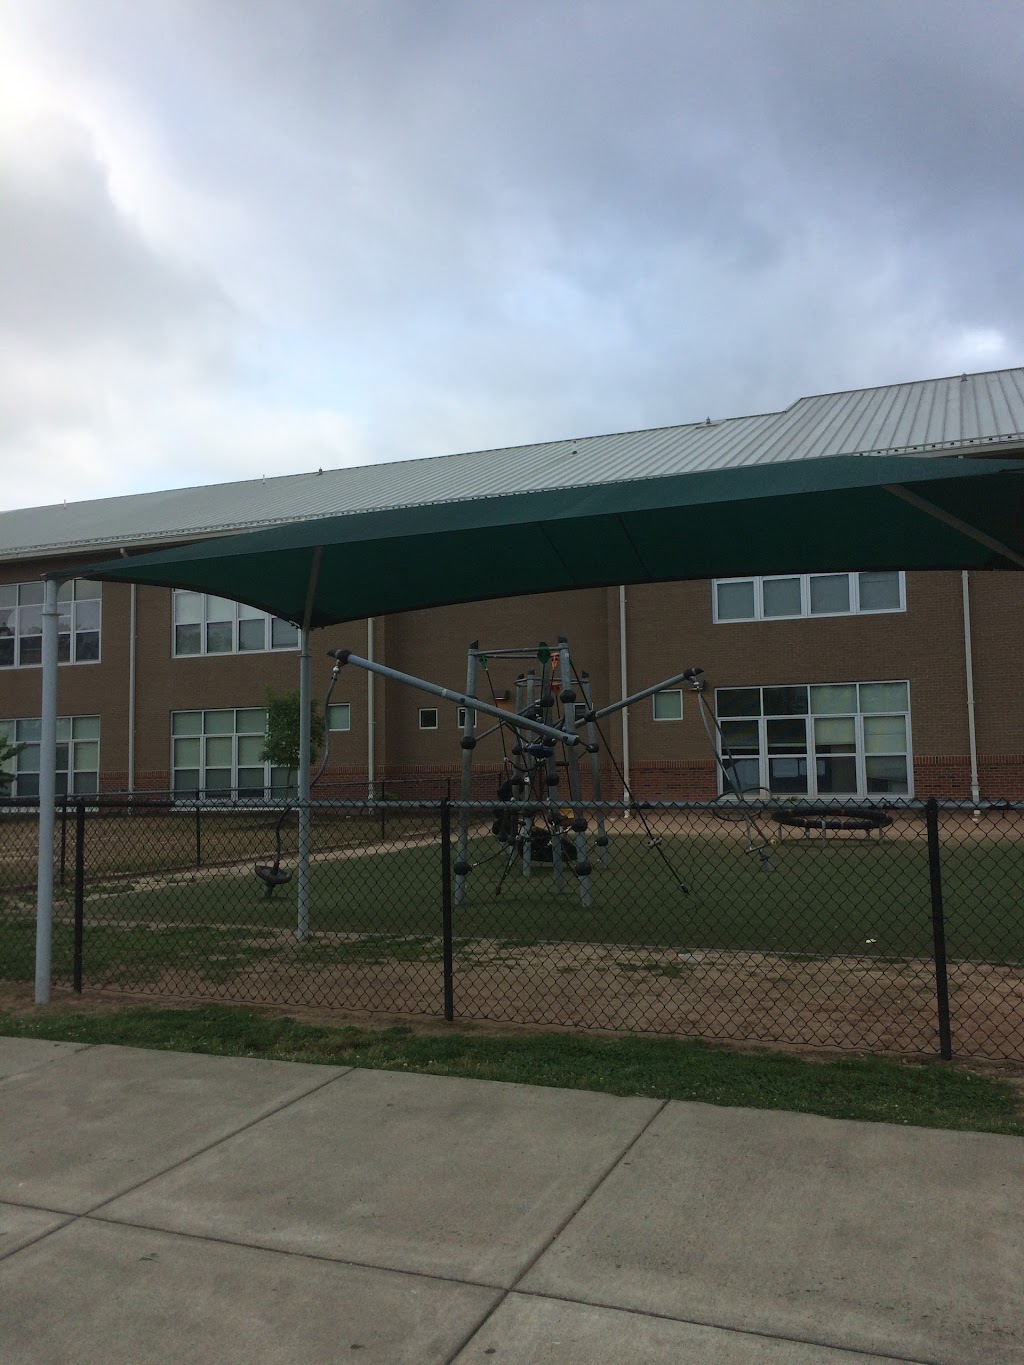 Alston Ridge Elementary School | 11555 Green Level Church Road, Cary, NC 27519, USA | Phone: (919) 544-2474